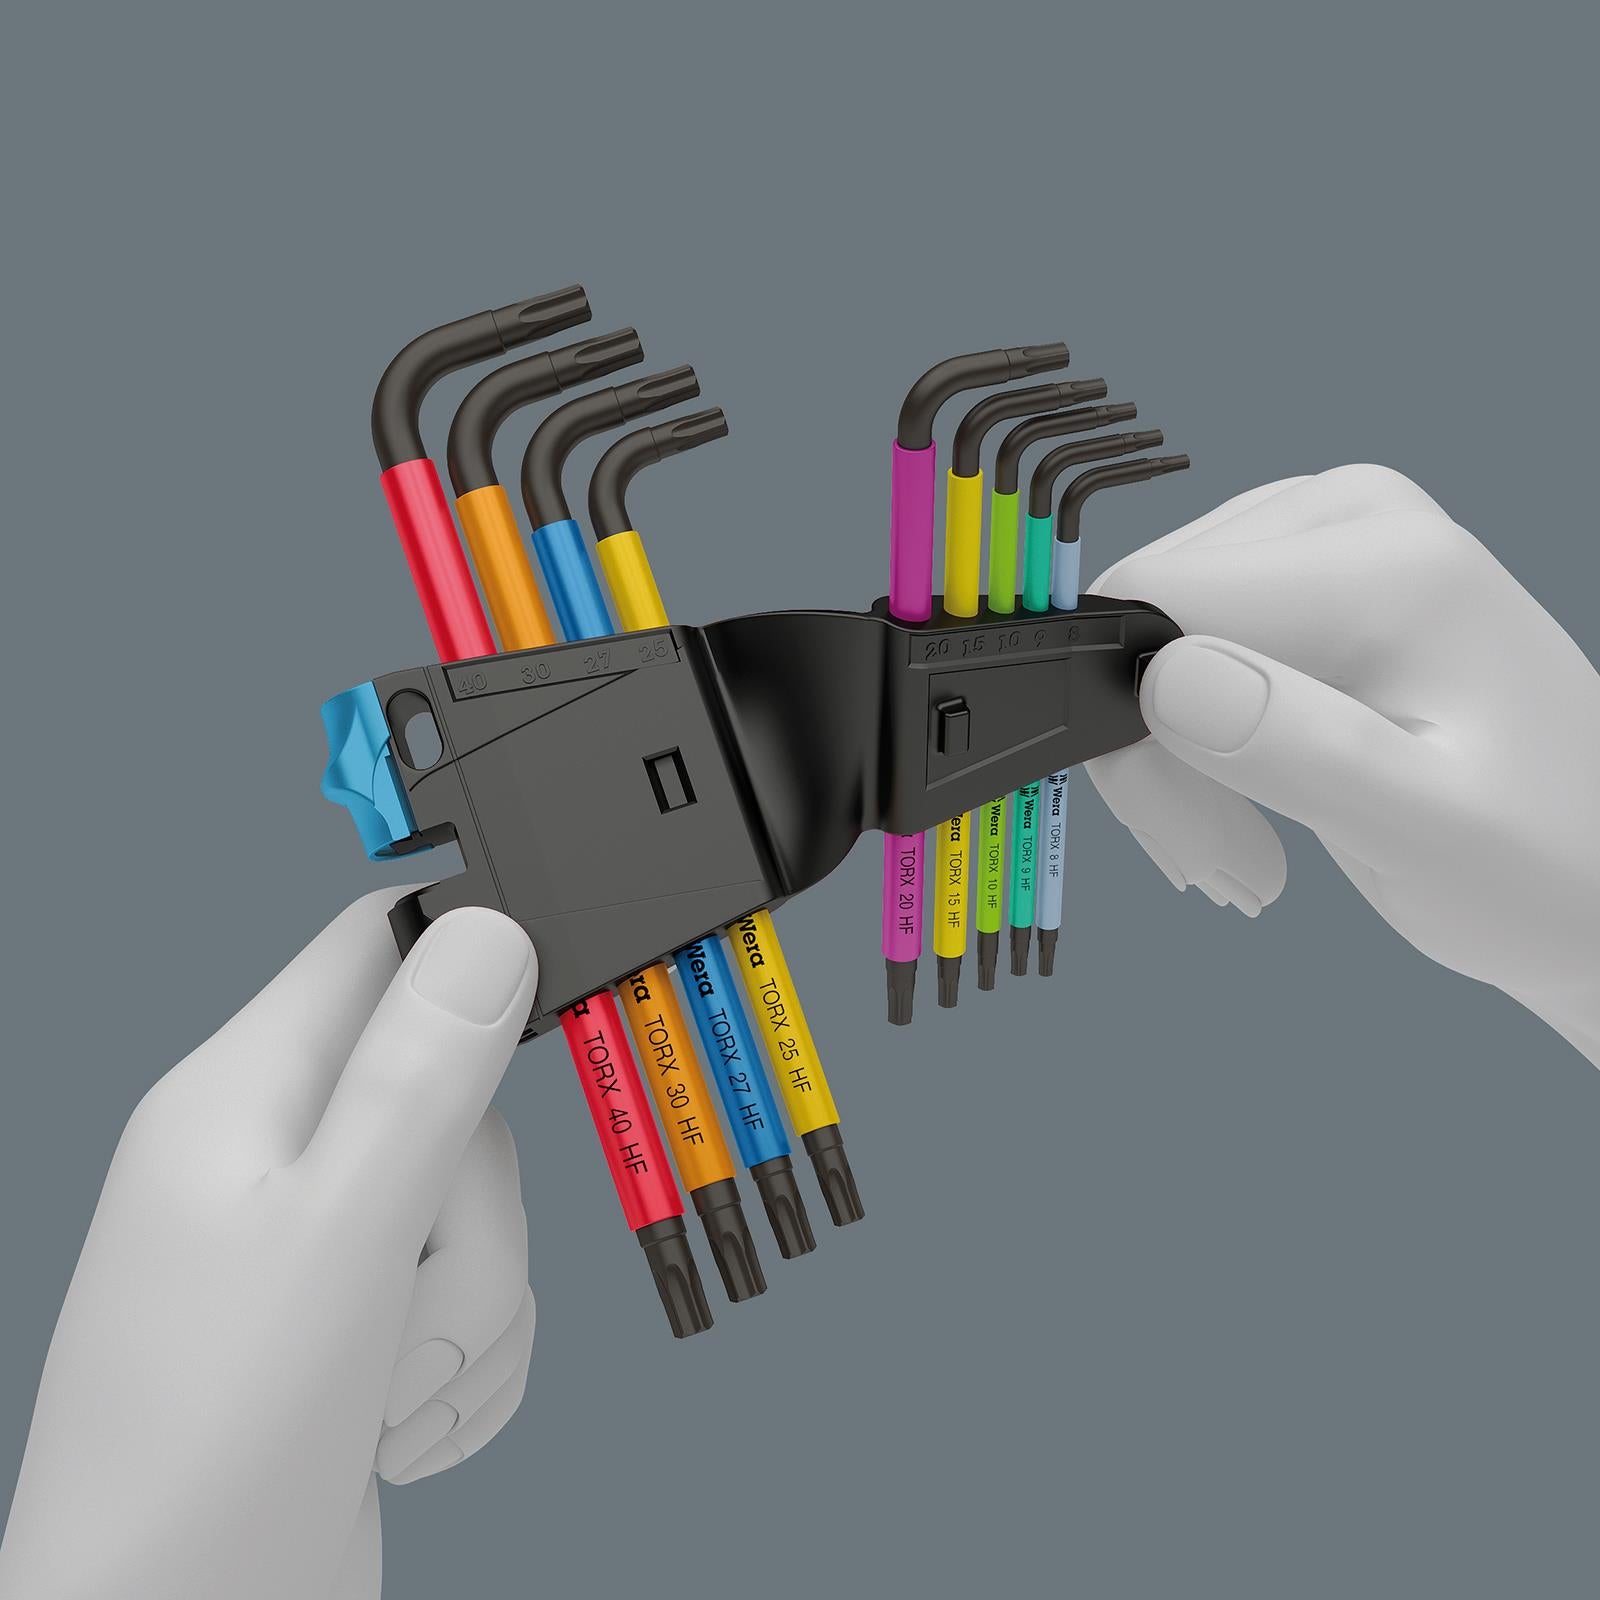 Wera Torx Key Multicolour HF 1 967/9 L Key Set with Holding Function 9 Piece T8-T40